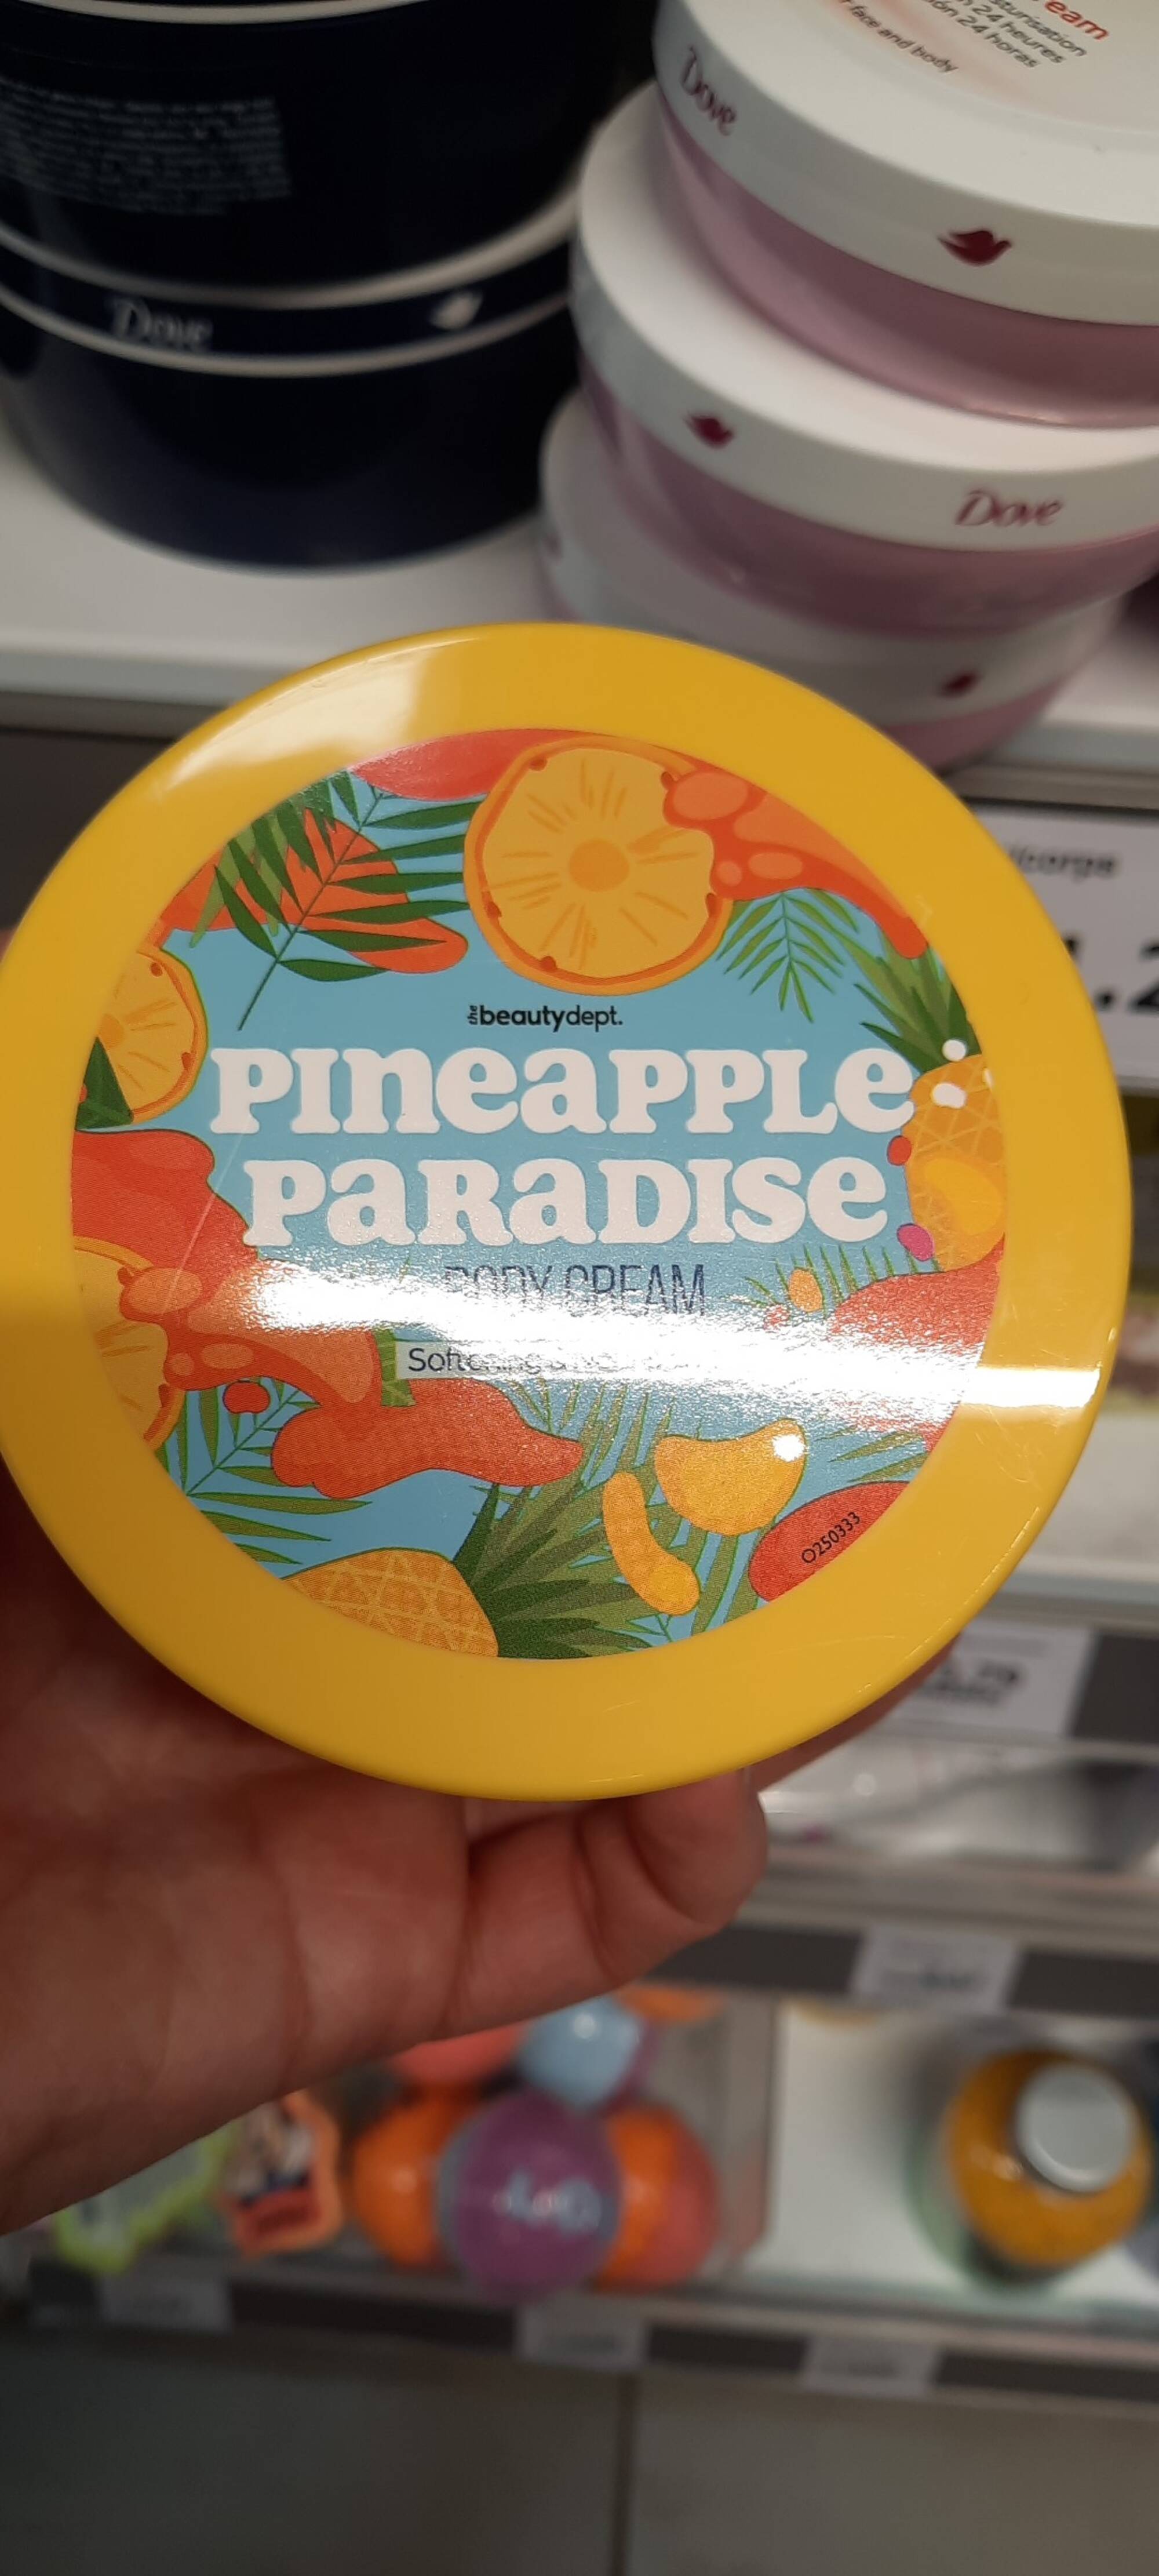 THE BEAUTY DEPT - Pineapple Paradise - Body Cream